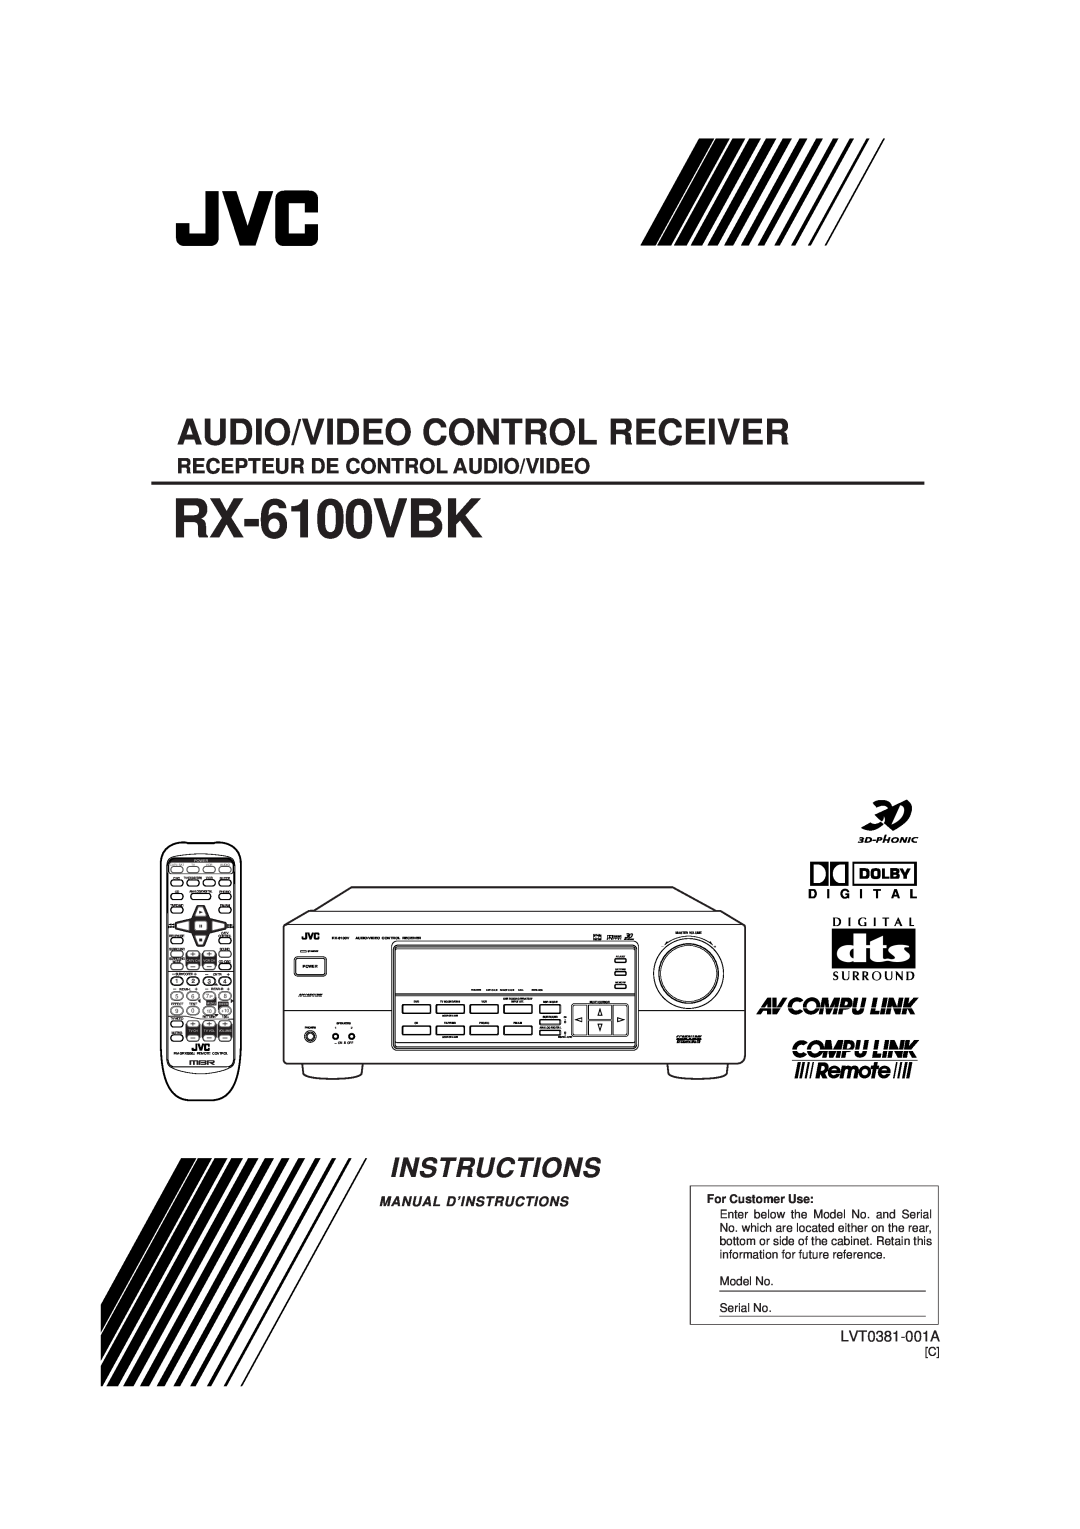 JVC RX-6100VBK manual Audio/Video Control Receiver, Instructions, Recepteur De Control Audio/Video, LVT0381-001A, Power 